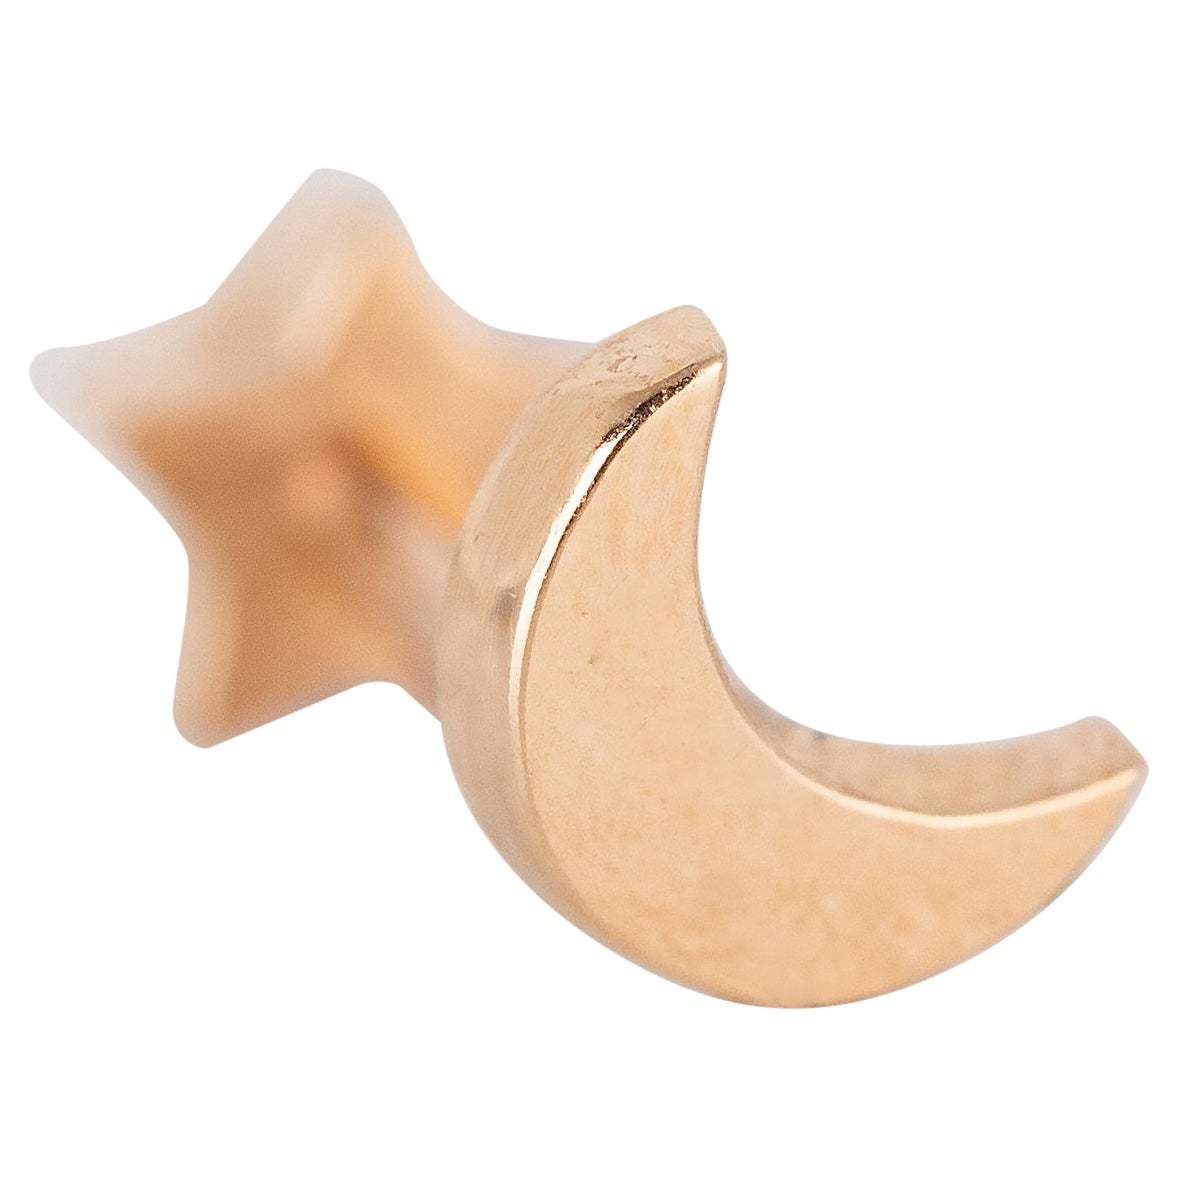 Yarım Ay/Hilal Model Altın Piercing